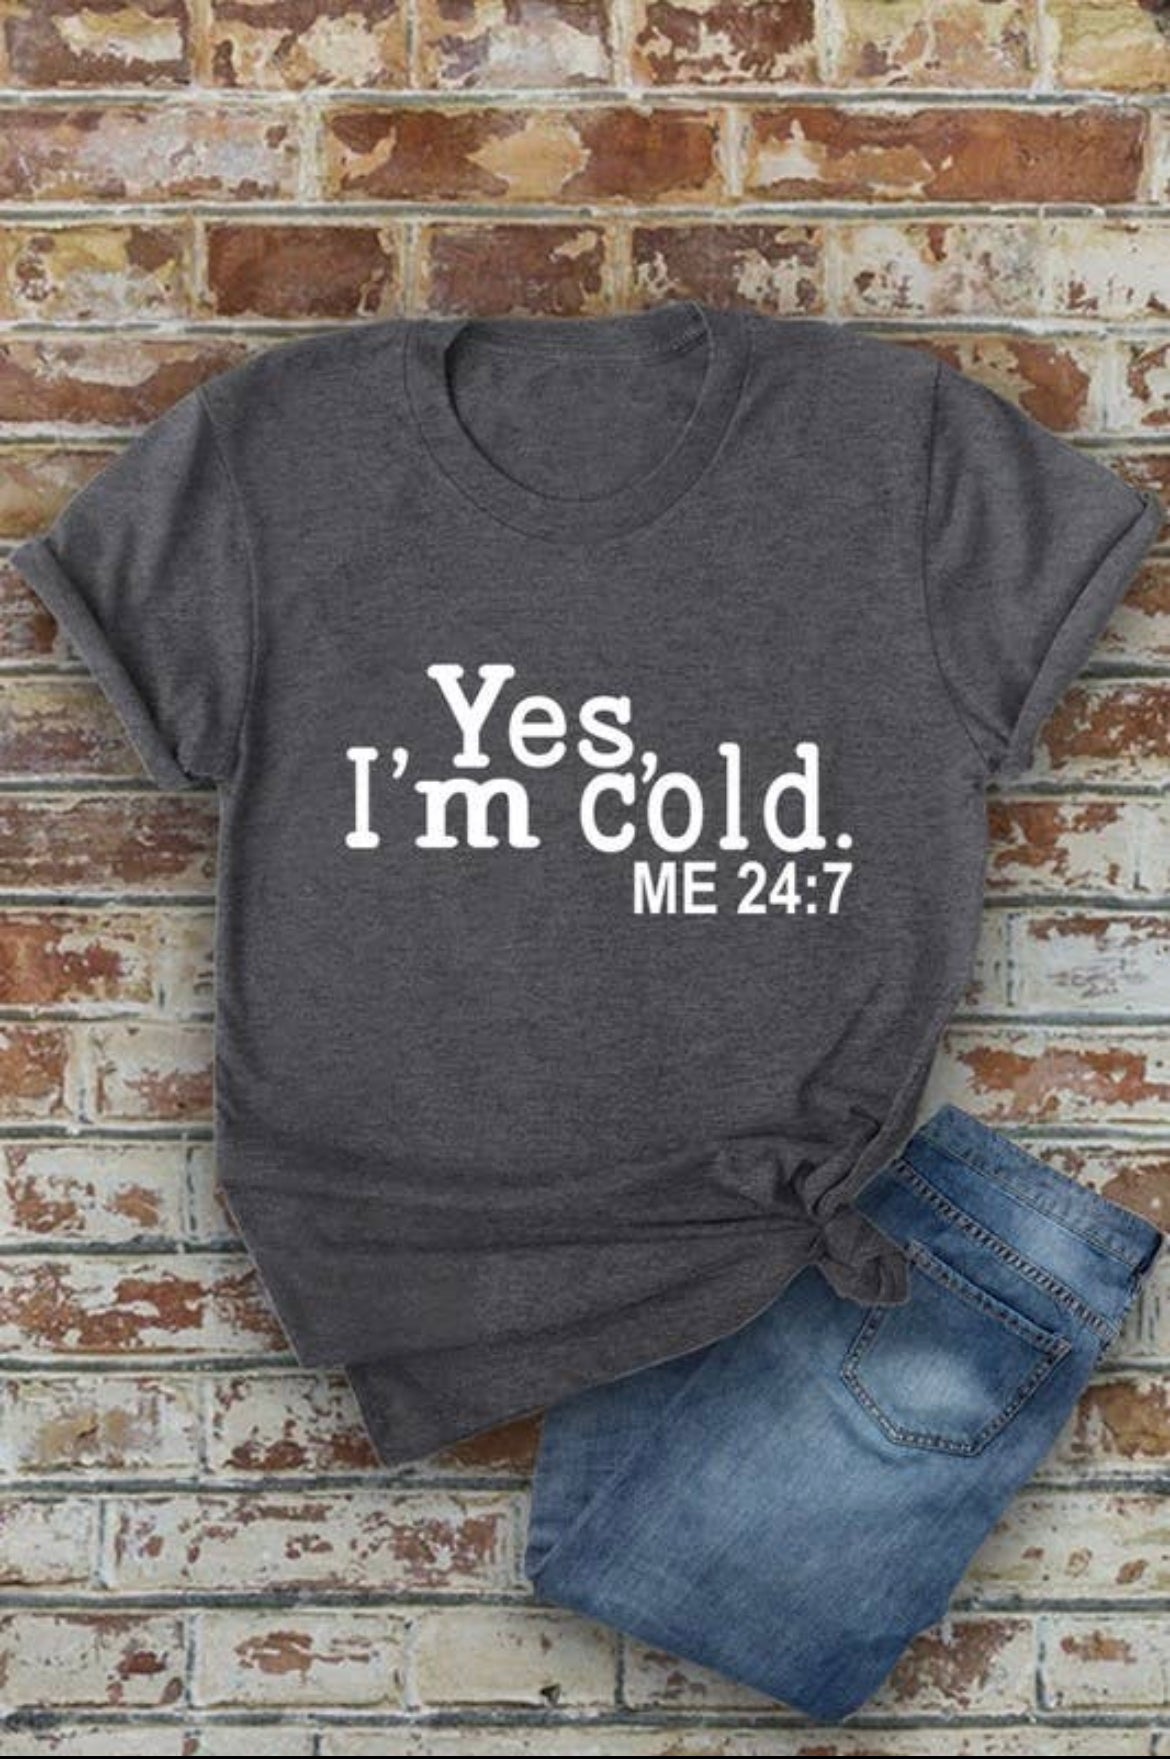 I’m cold T shirt